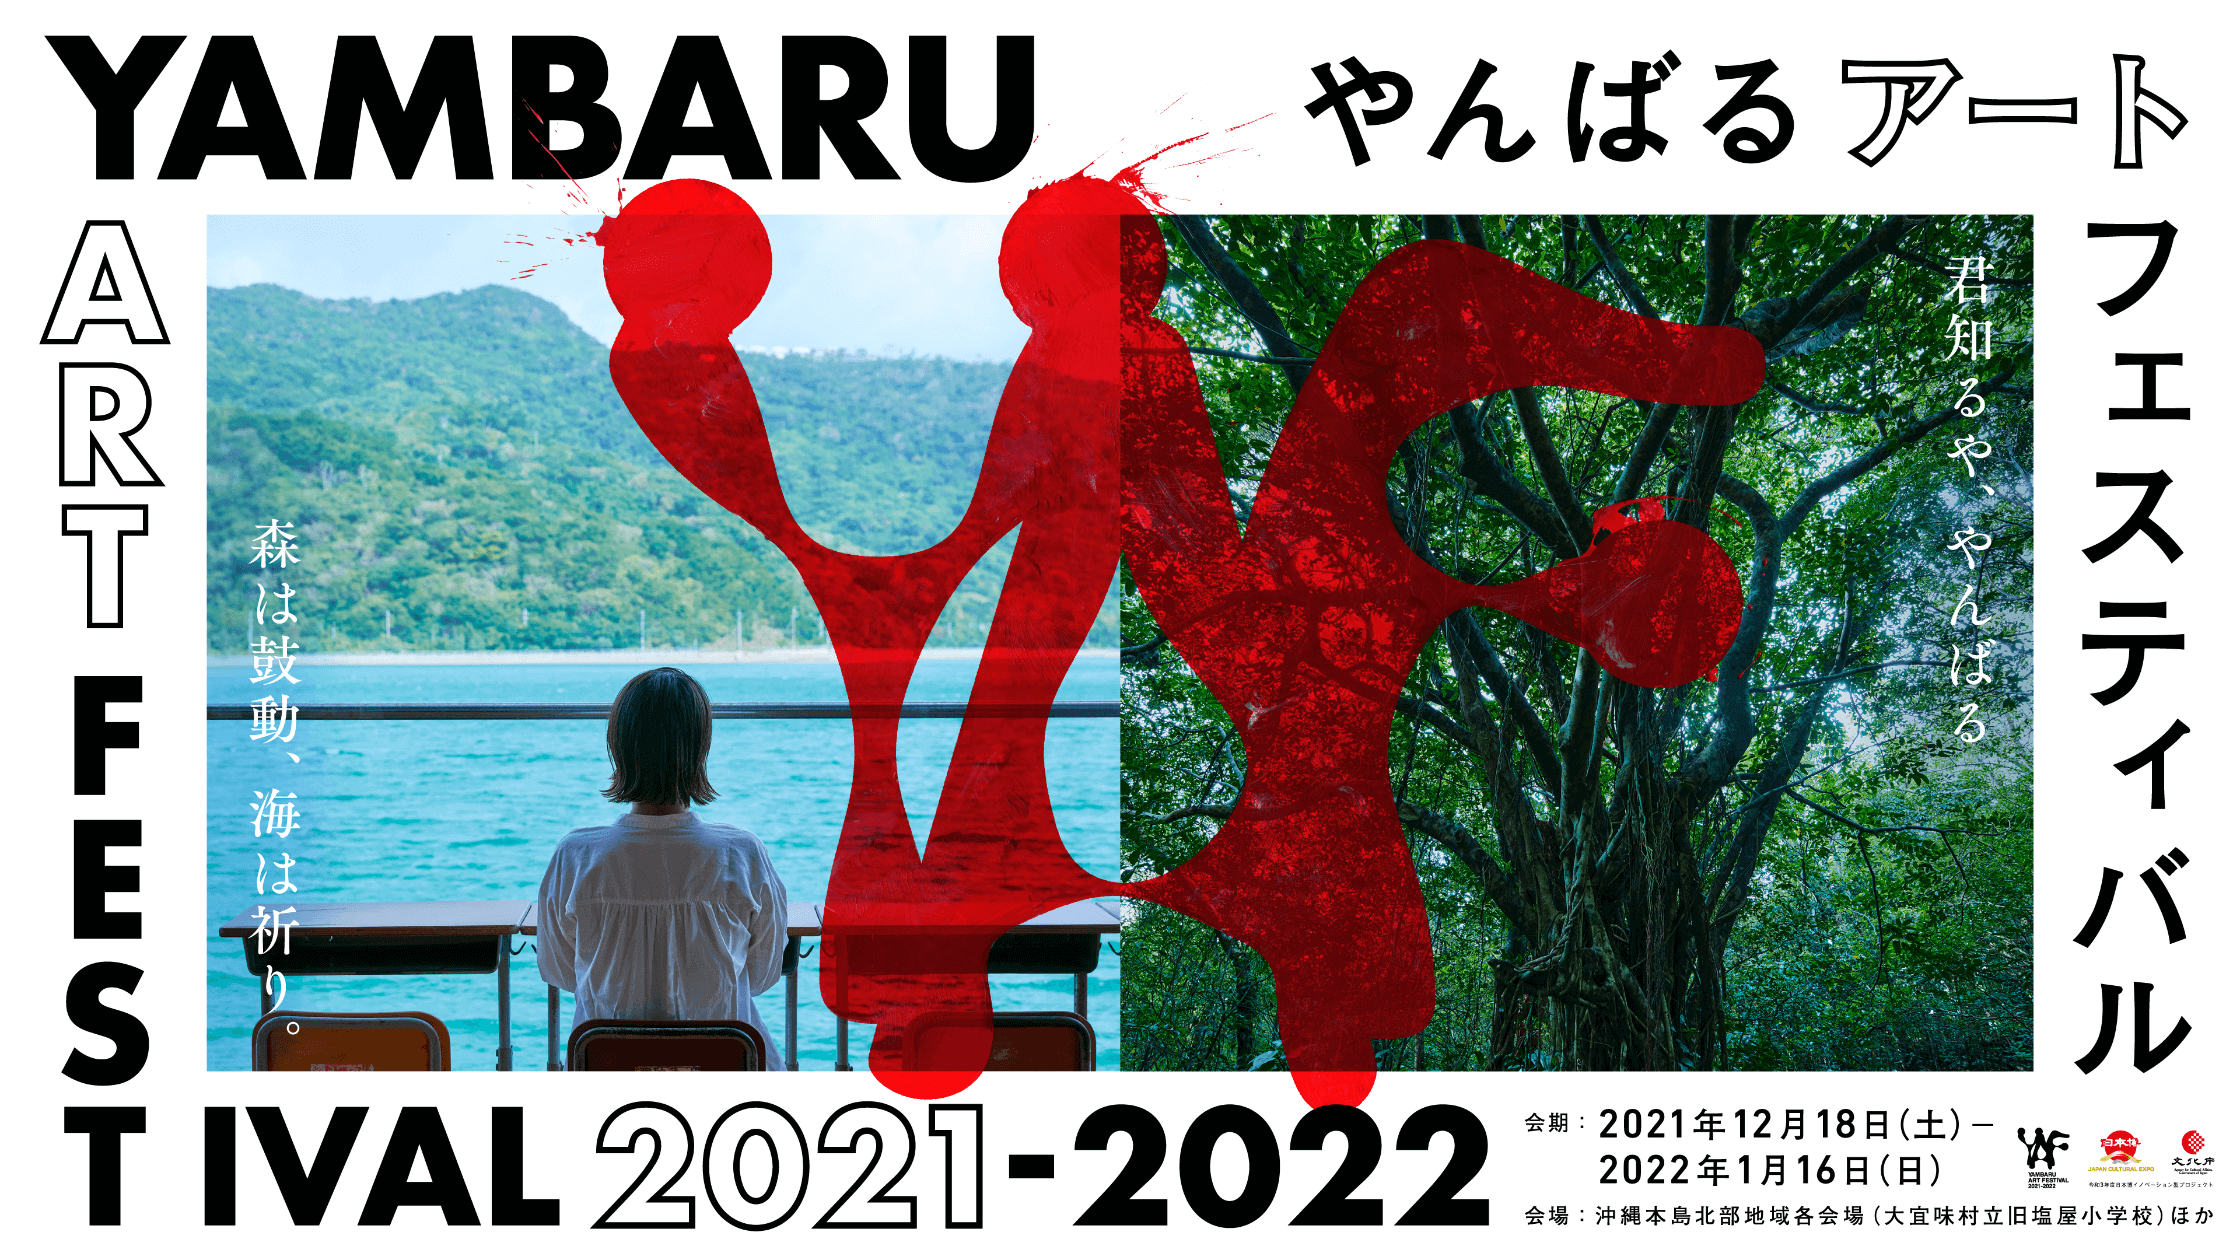 YAMBARU ART FESTIVAL 2020-2021 やんばるアートフェスティバル